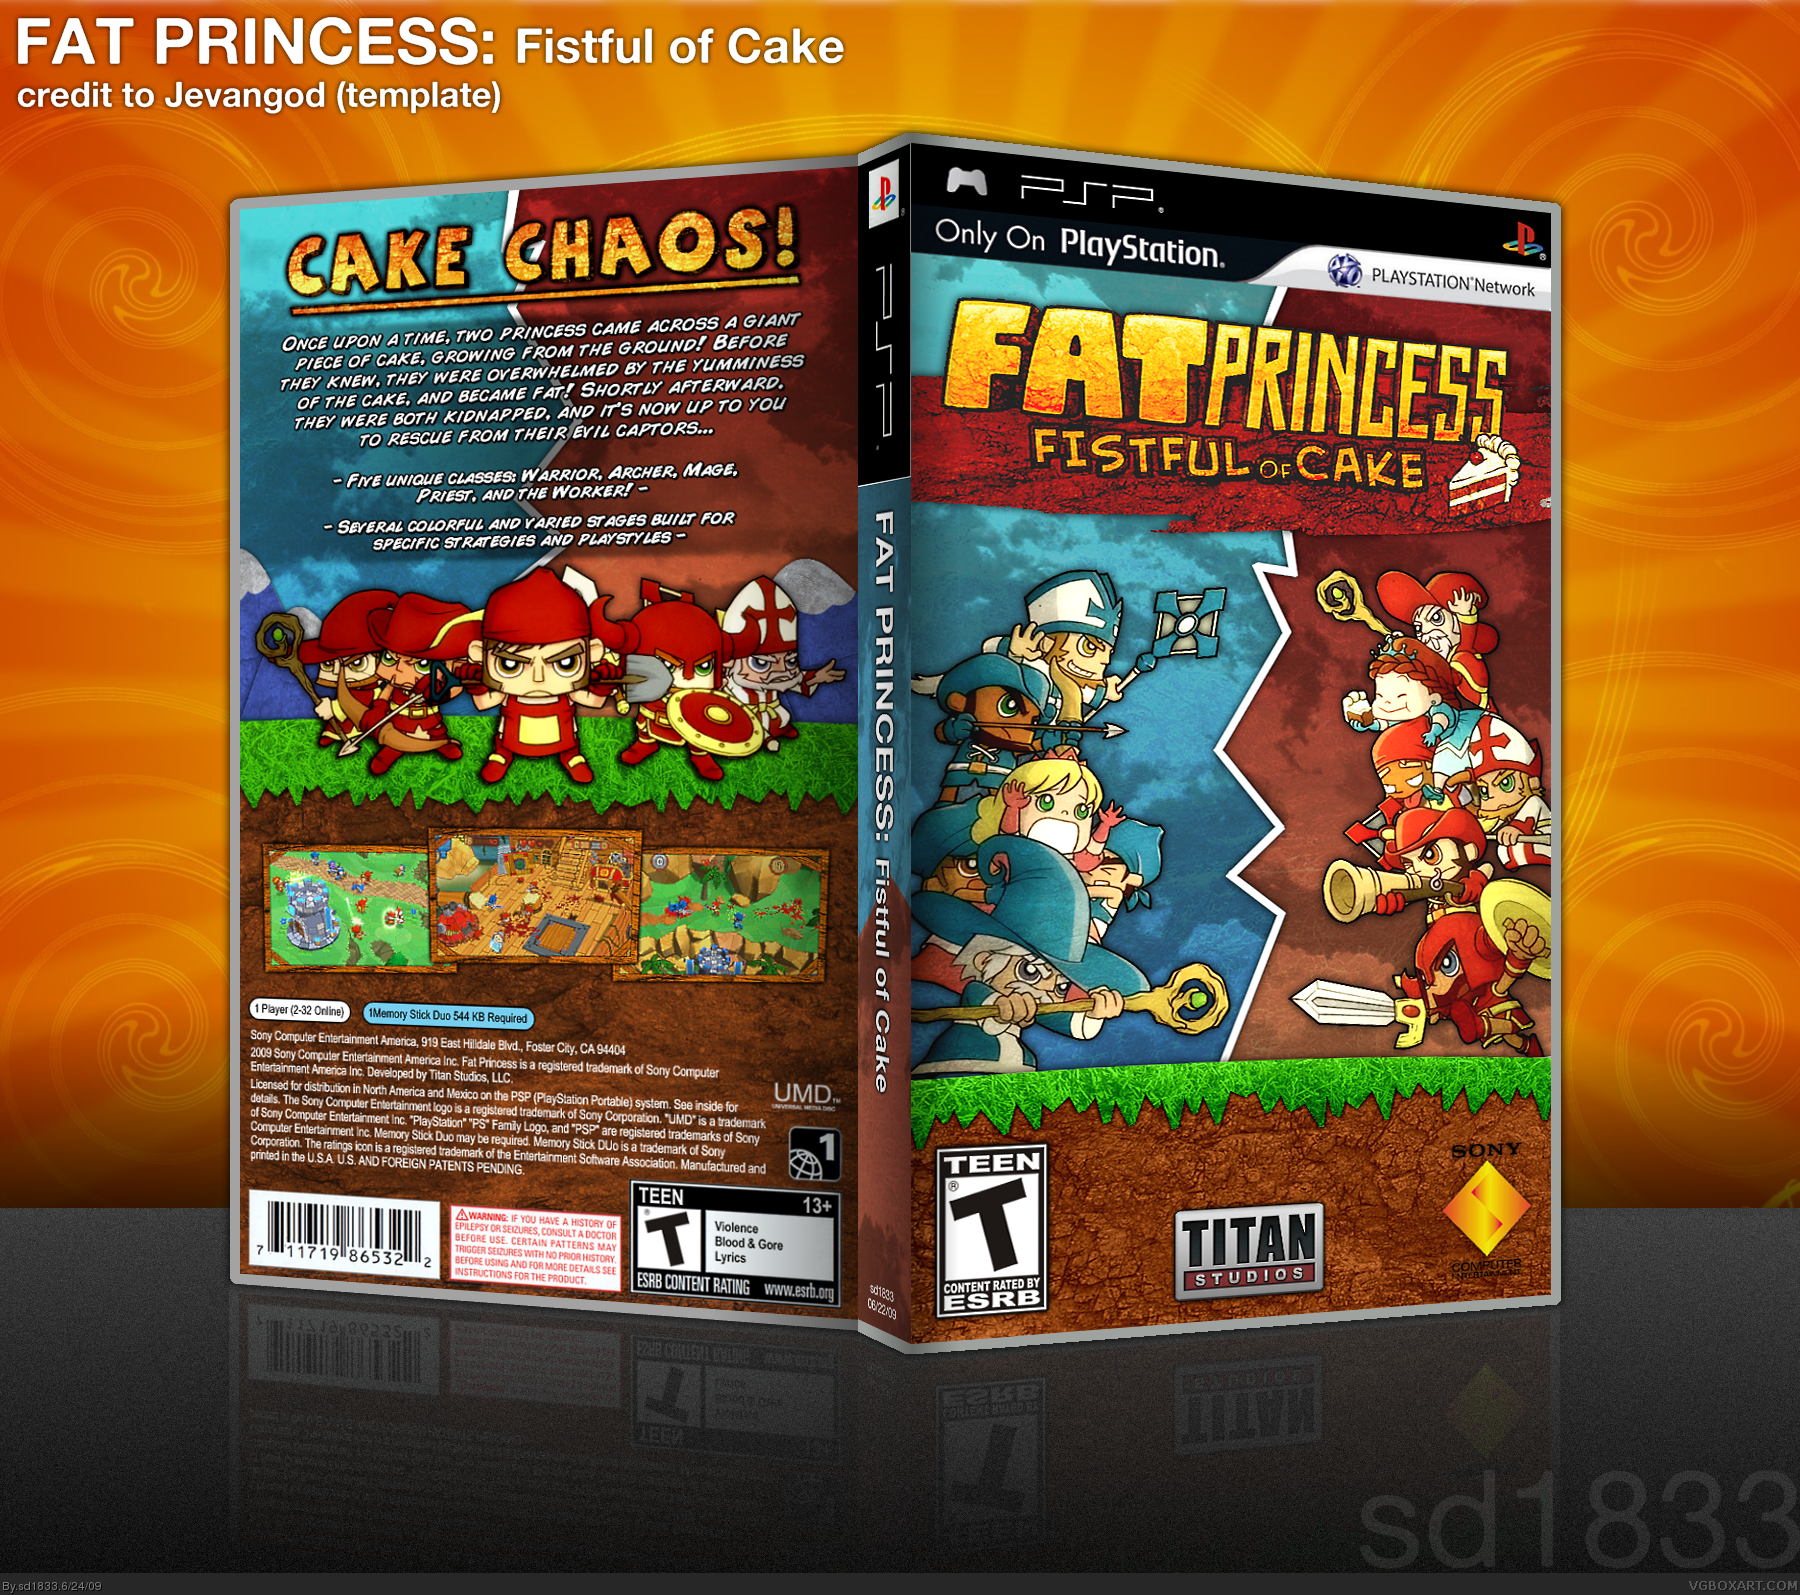 Fat Princess Fistful of Cake PSP. Fat Princess Fistful of Cake PSP обложка. Принцесса Обжора на PSP. Fat Princess: Fistful of Cake PSP Cover.